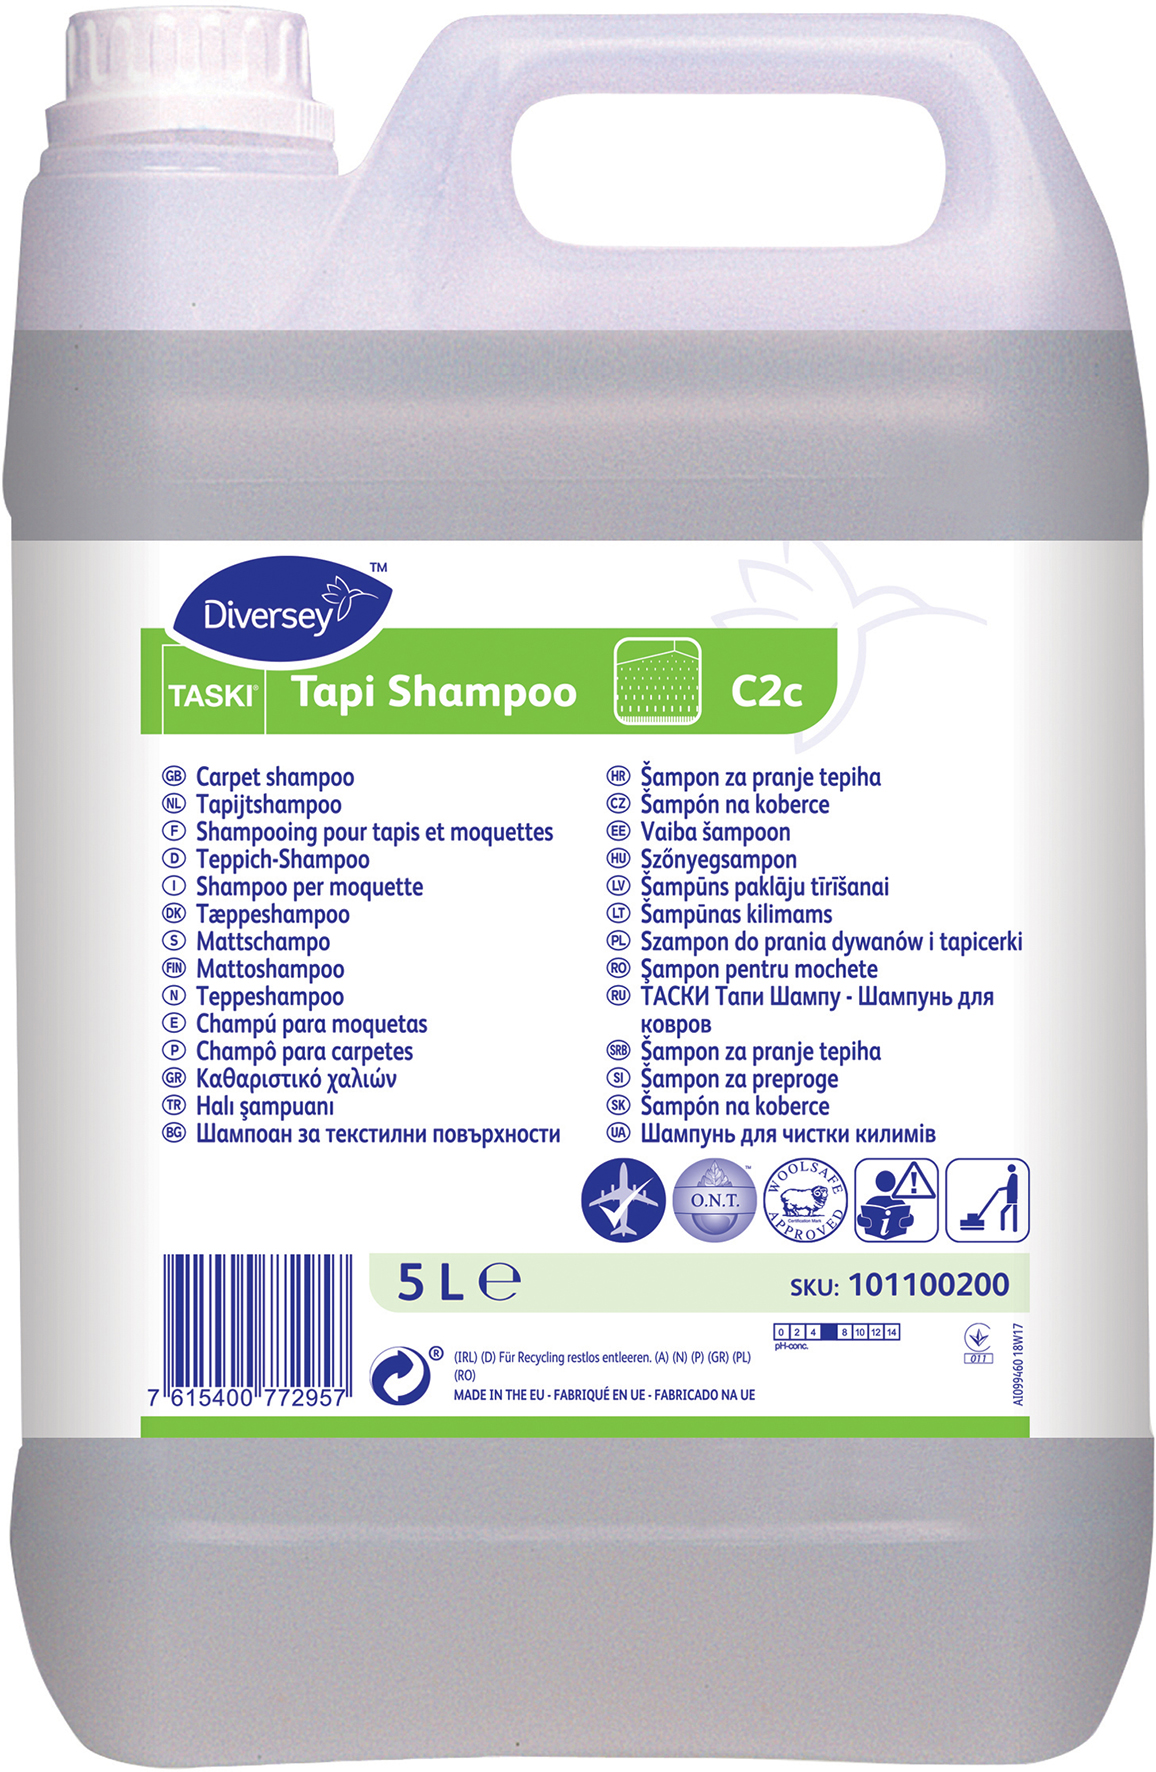 [2260262] Taski Tapi Shampoo W406 5L